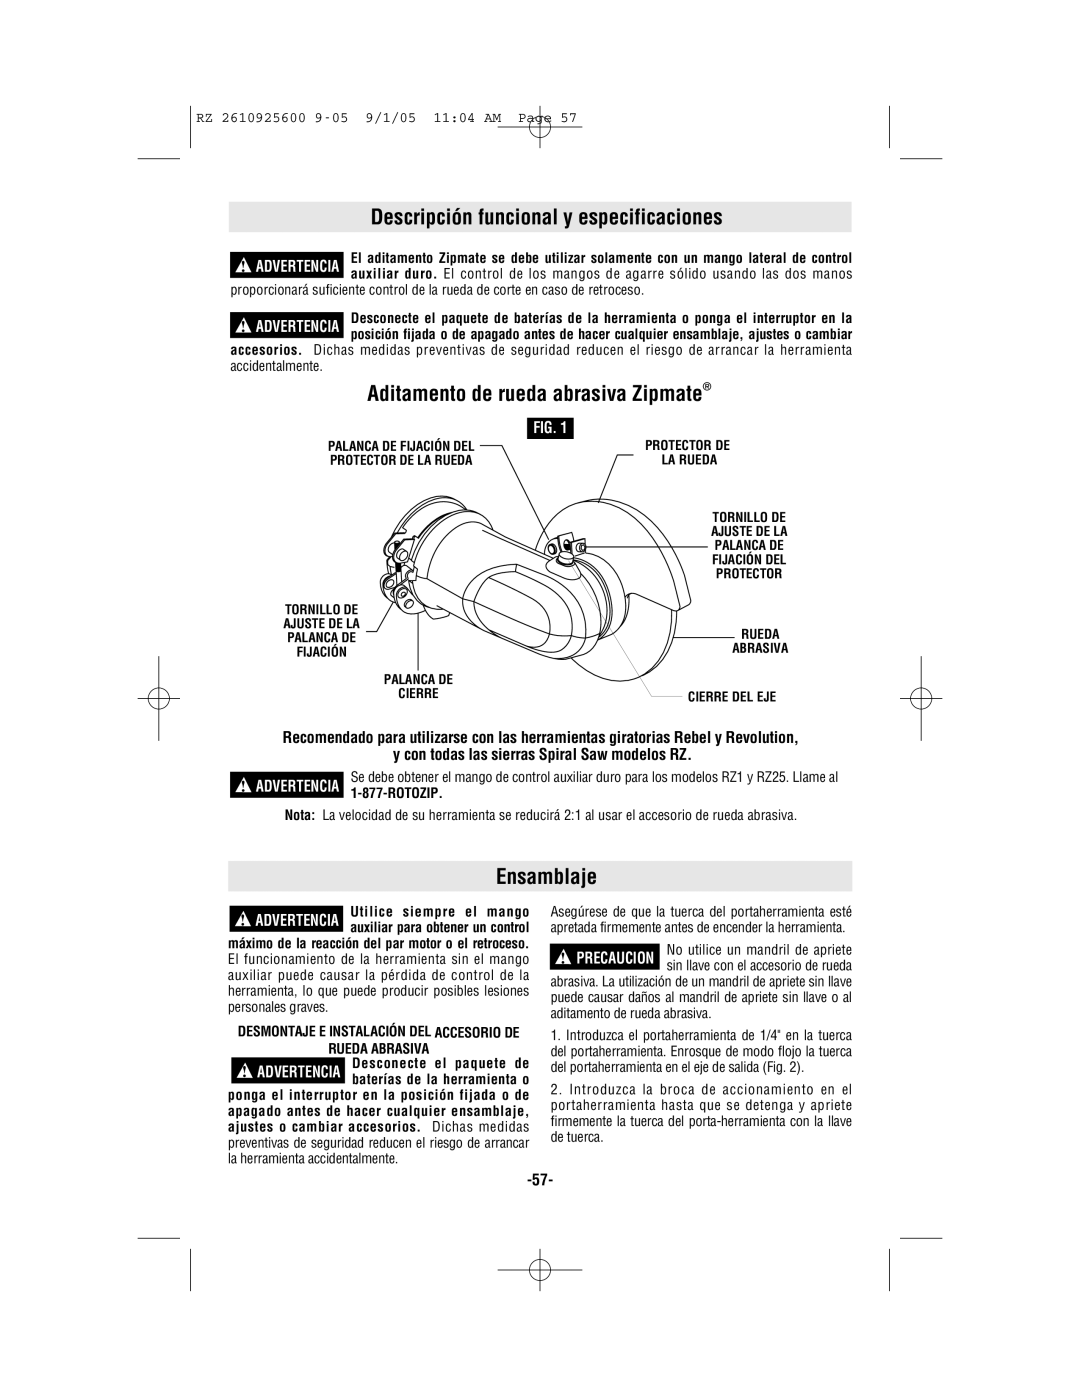 Bosch Power Tools ROTOZIP RZ18V manual Aditamento de rueda abrasiva Zipmate, Advertencia 1-877-ROTOZIP, Rueda Abrasiva 